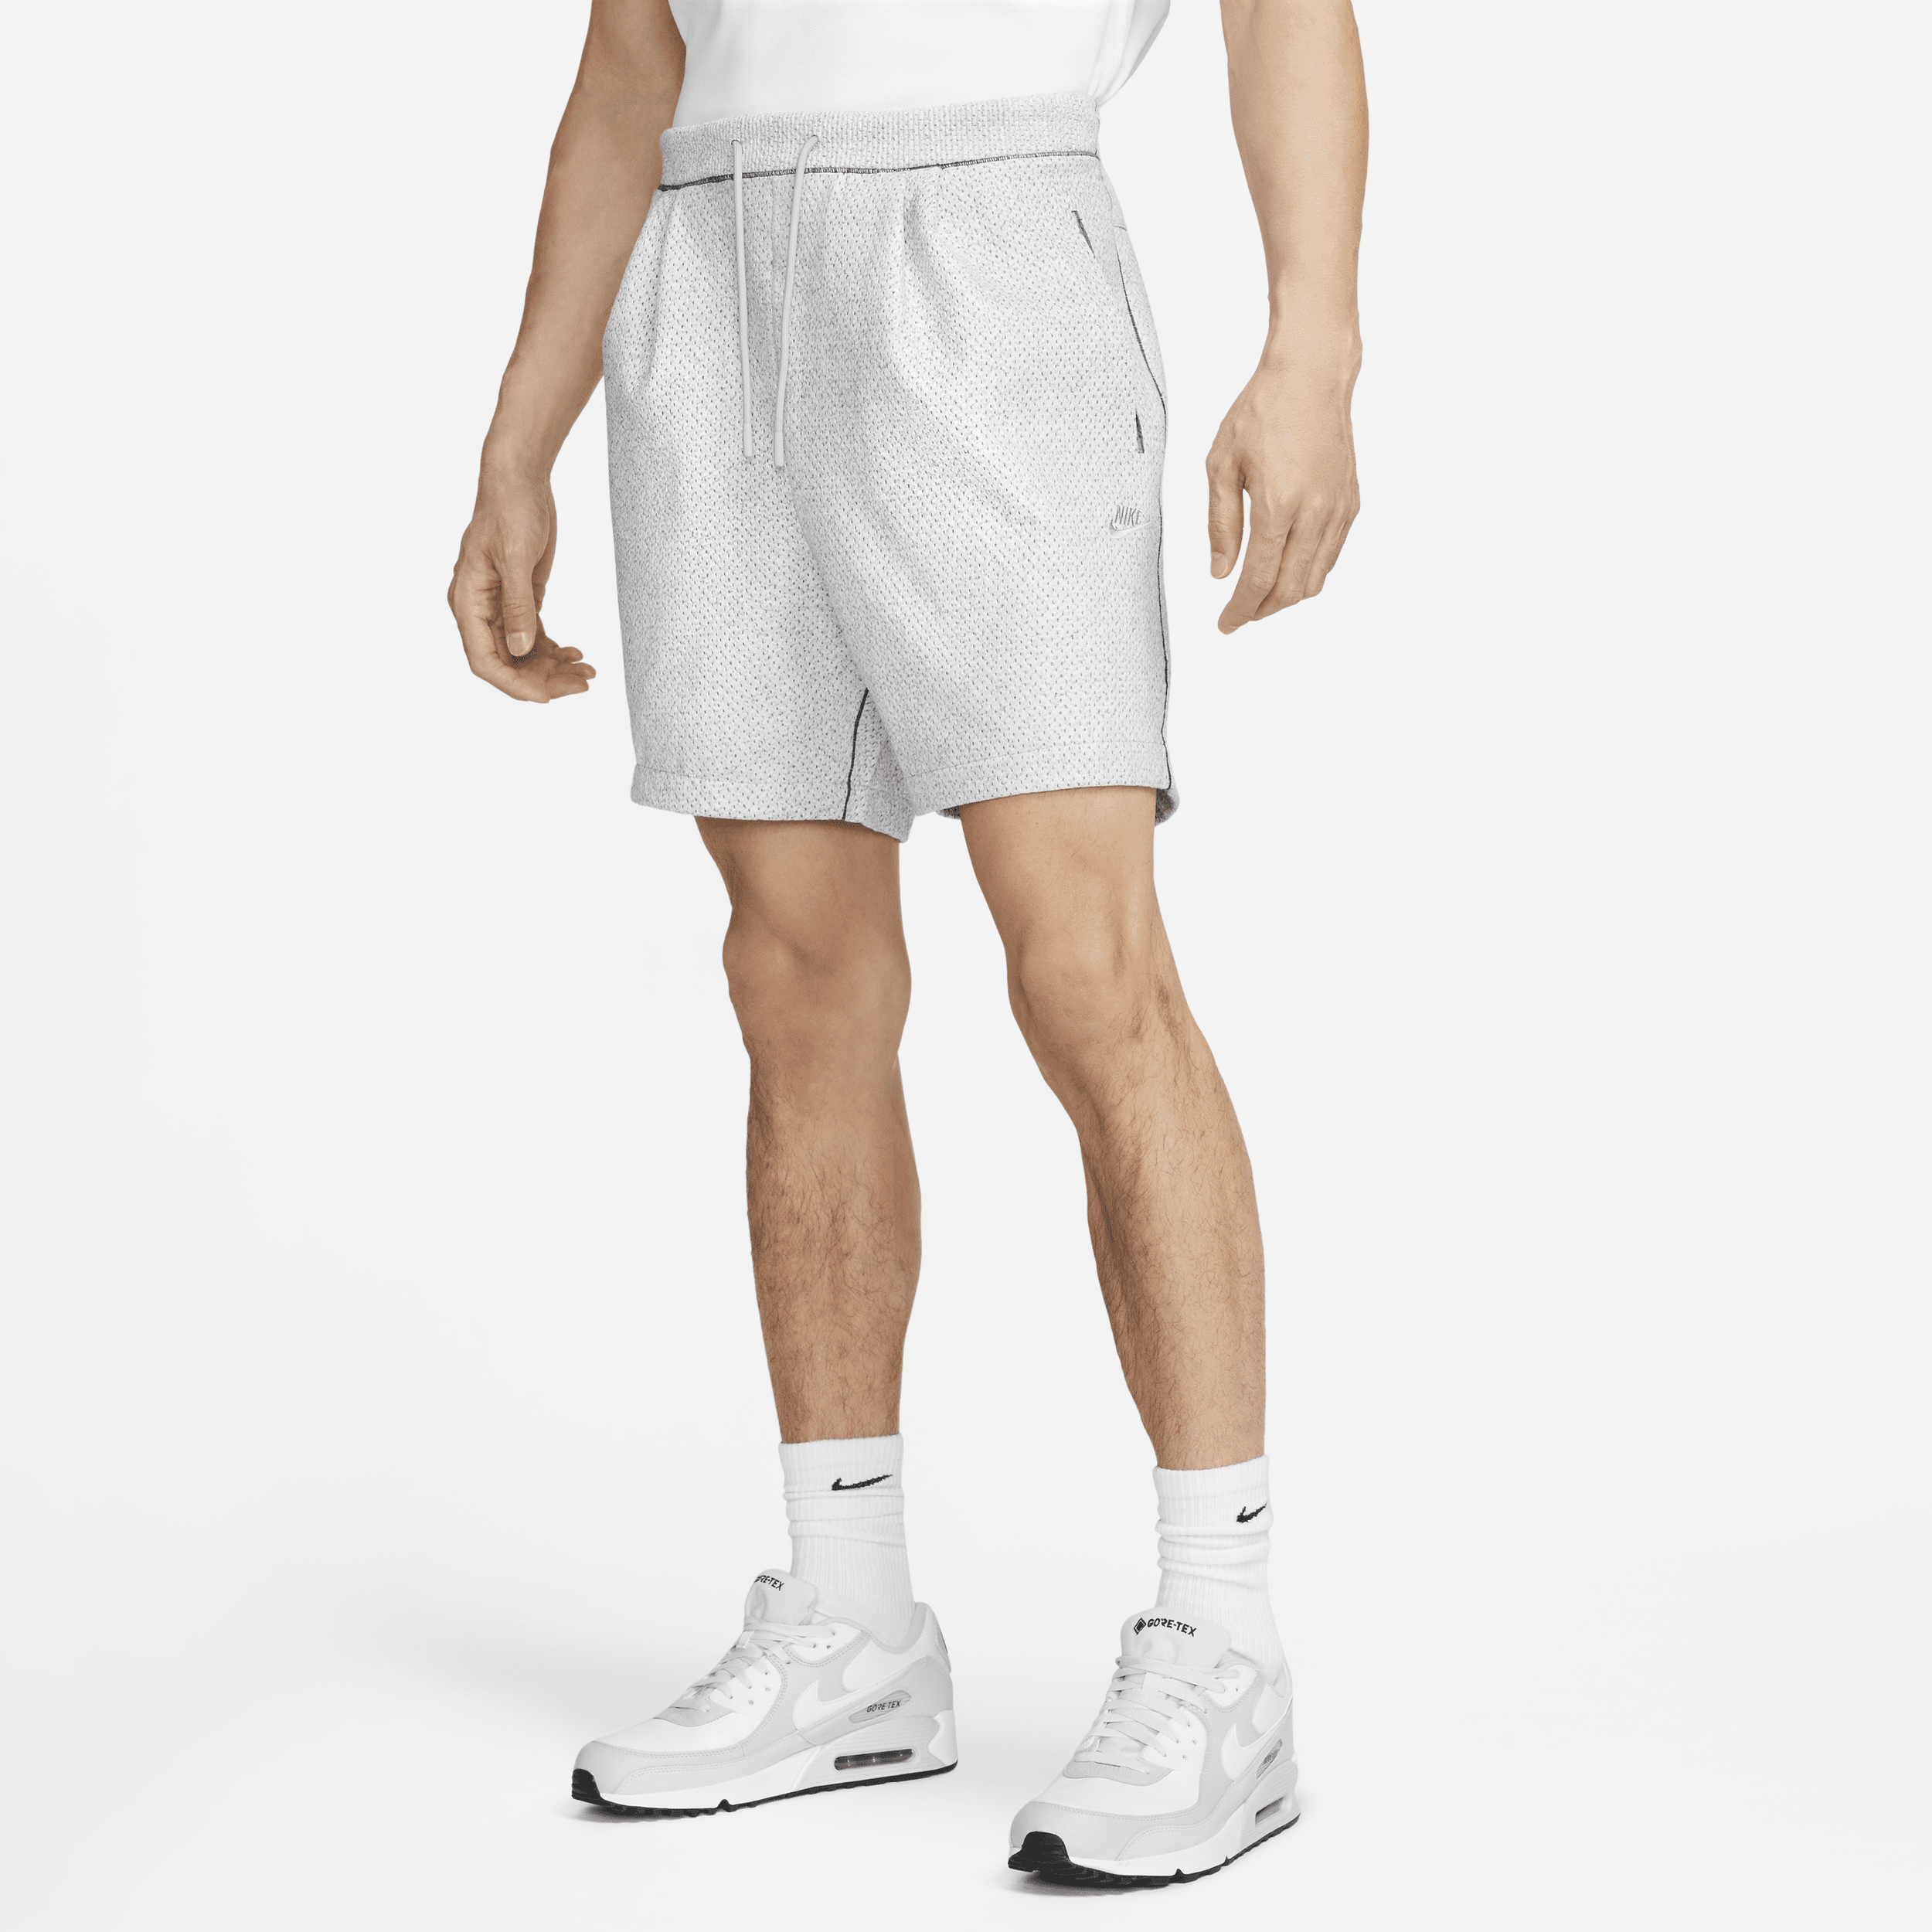 Nike Forward Shorts herenshorts - Grijs